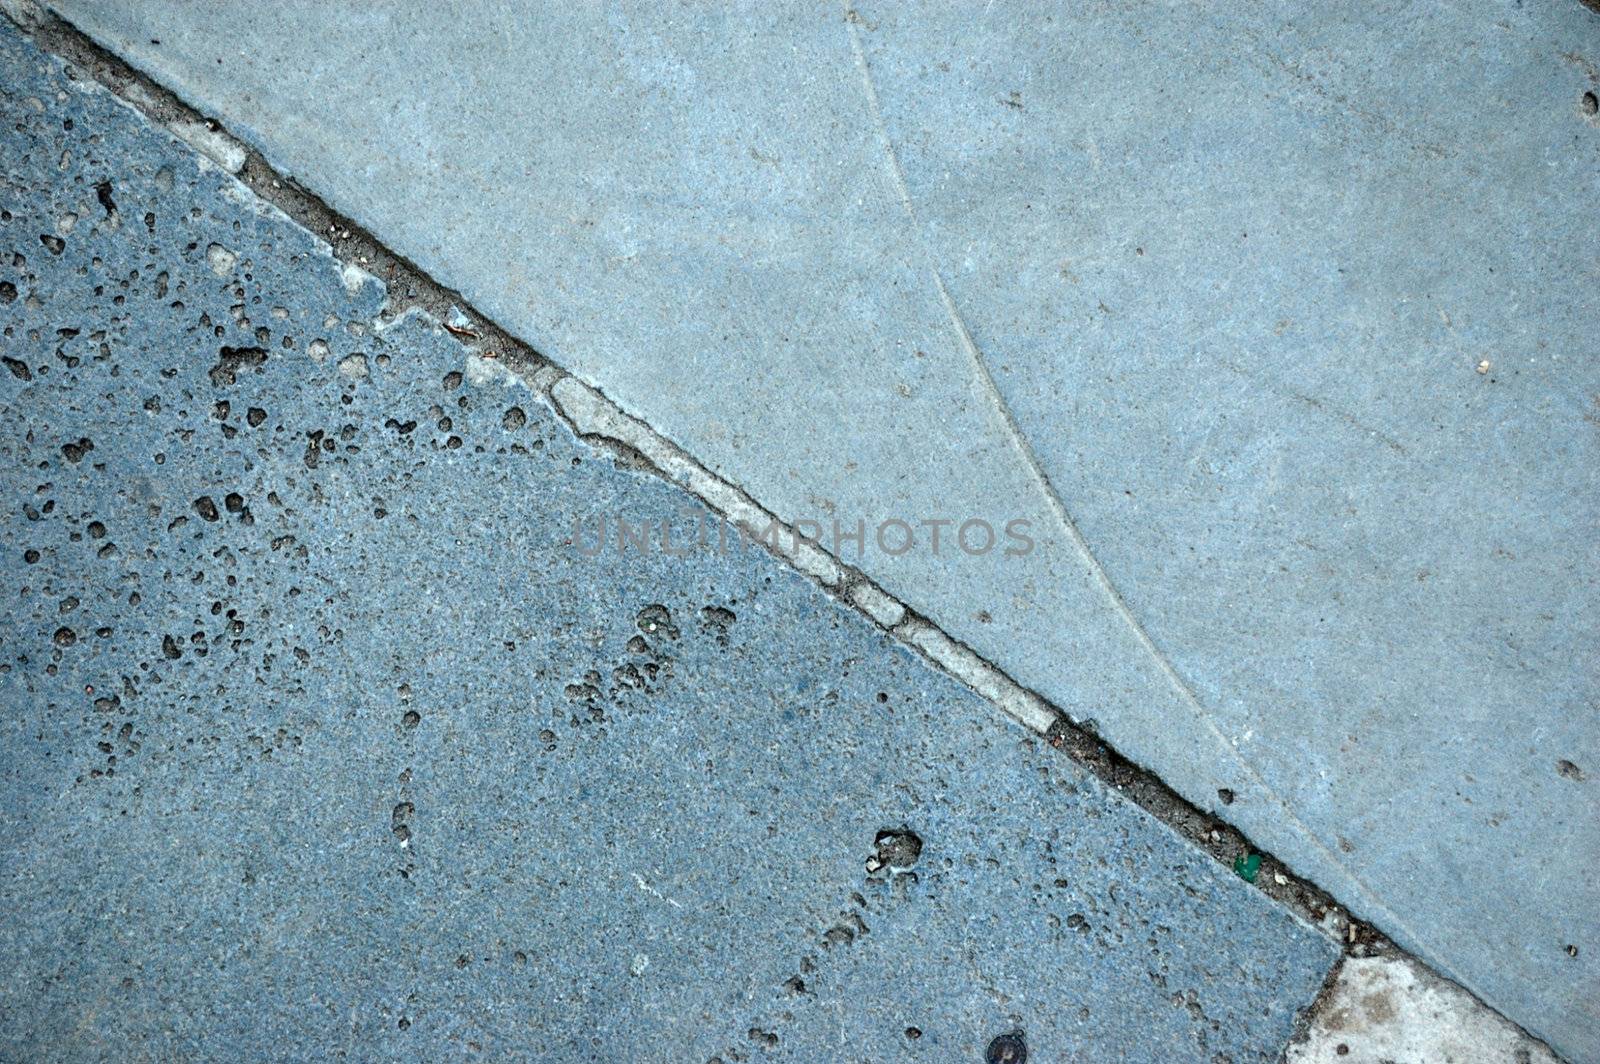 pavement by mettus